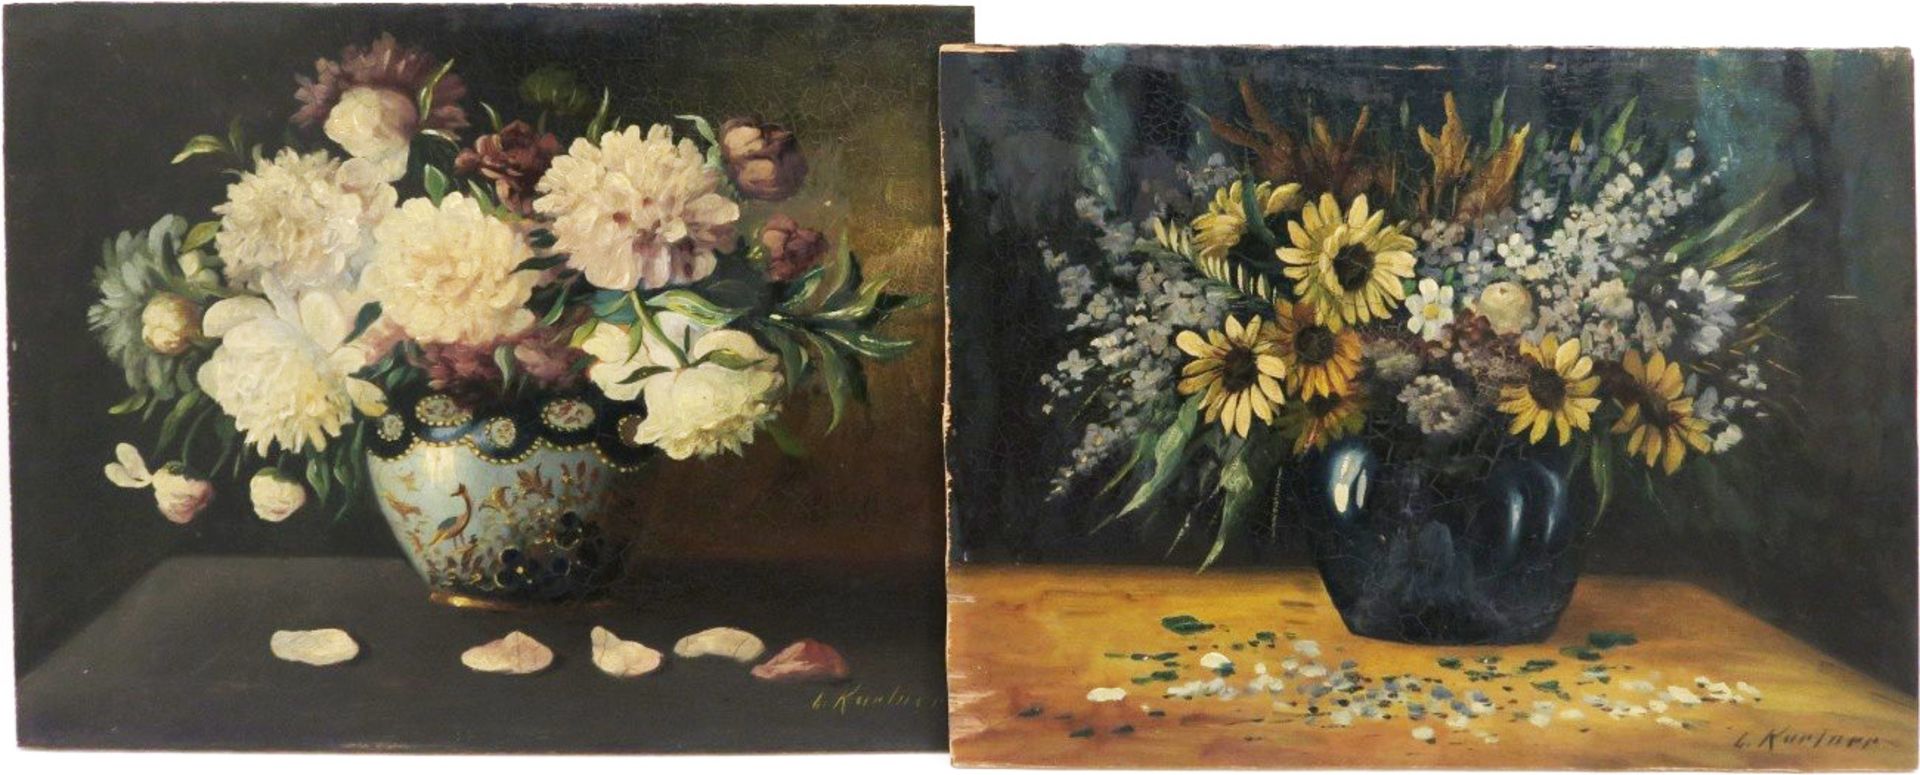 Kurtner, L. 19./20. Jh. Blumenstillleben Zwei Gemälde. Öl/Holz. 29 x 38 cm bzw. 30 x 38 cm. R. u.